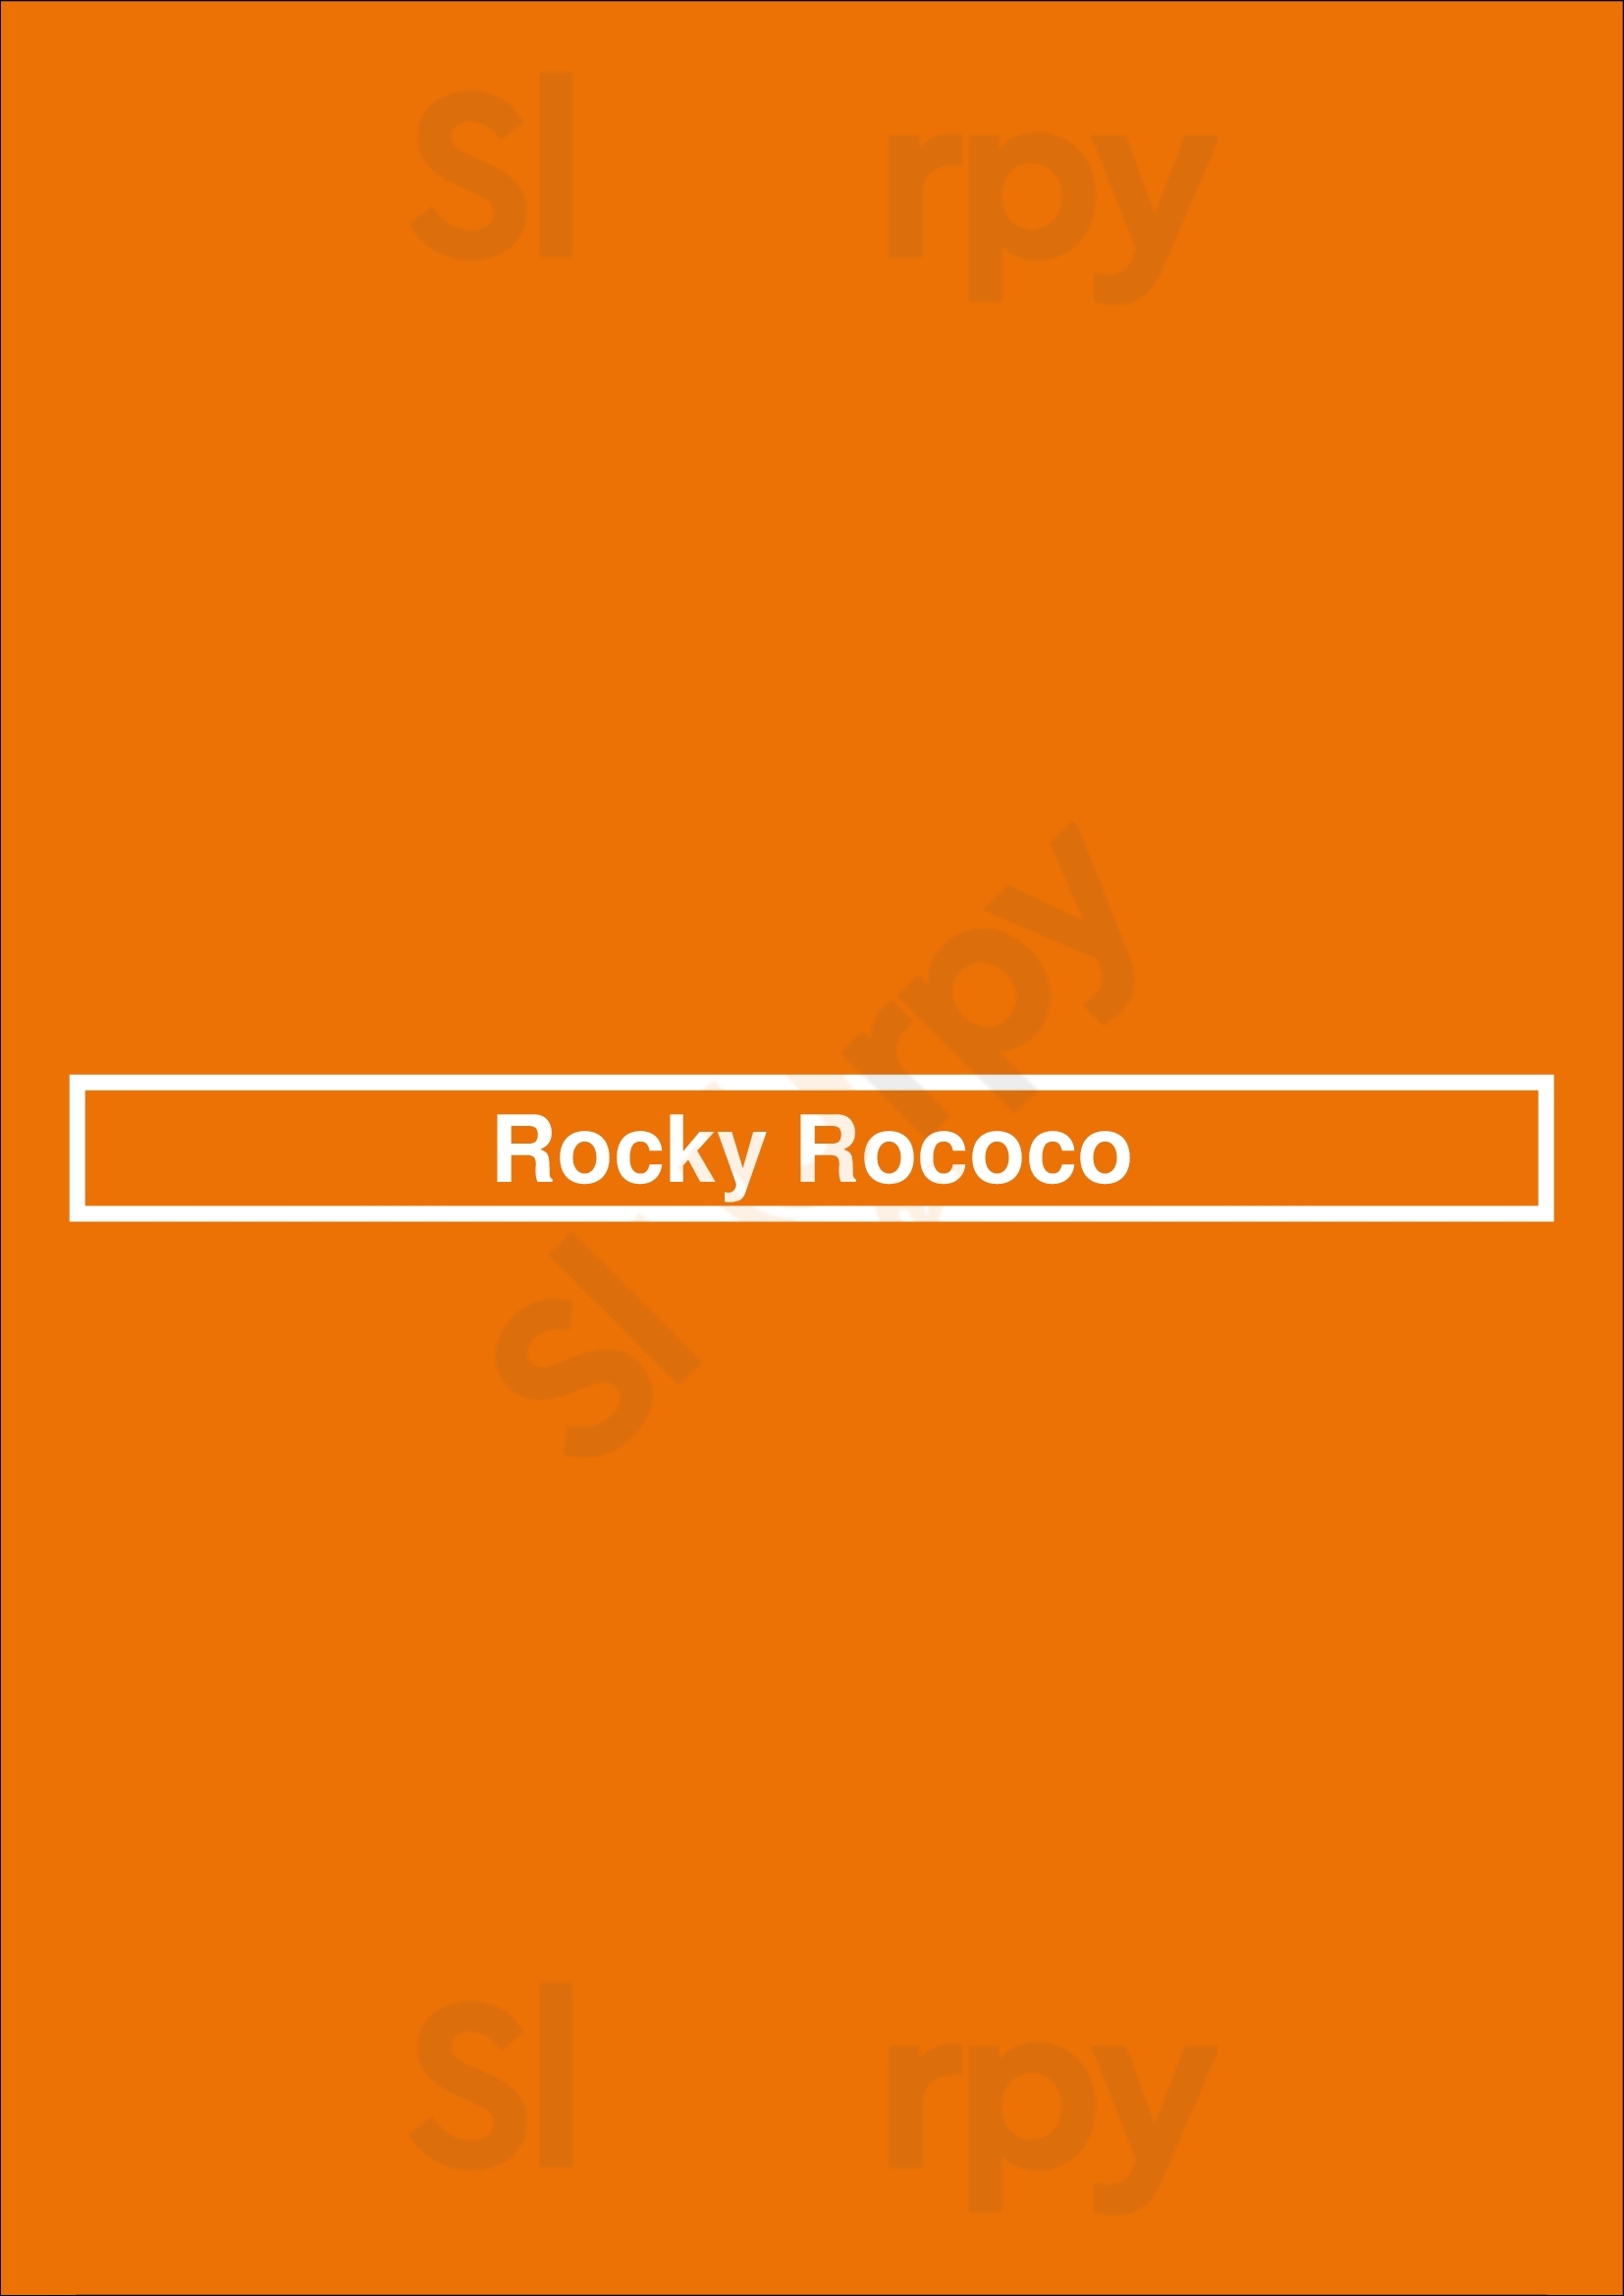 Rocky Rococo Milwaukee Menu - 1